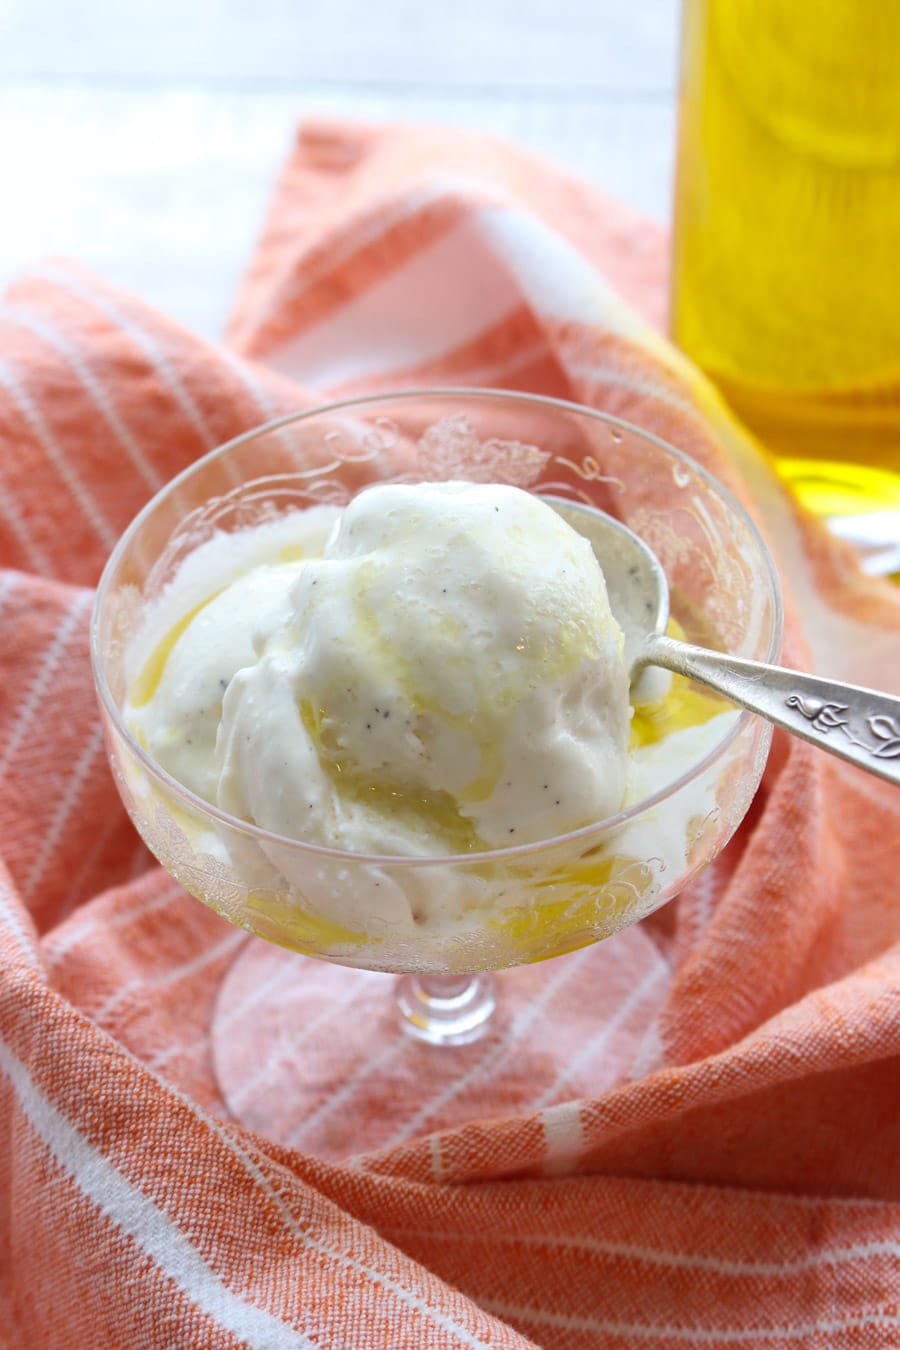 Dish of Vanilla ice cream with olive oil and sea salt